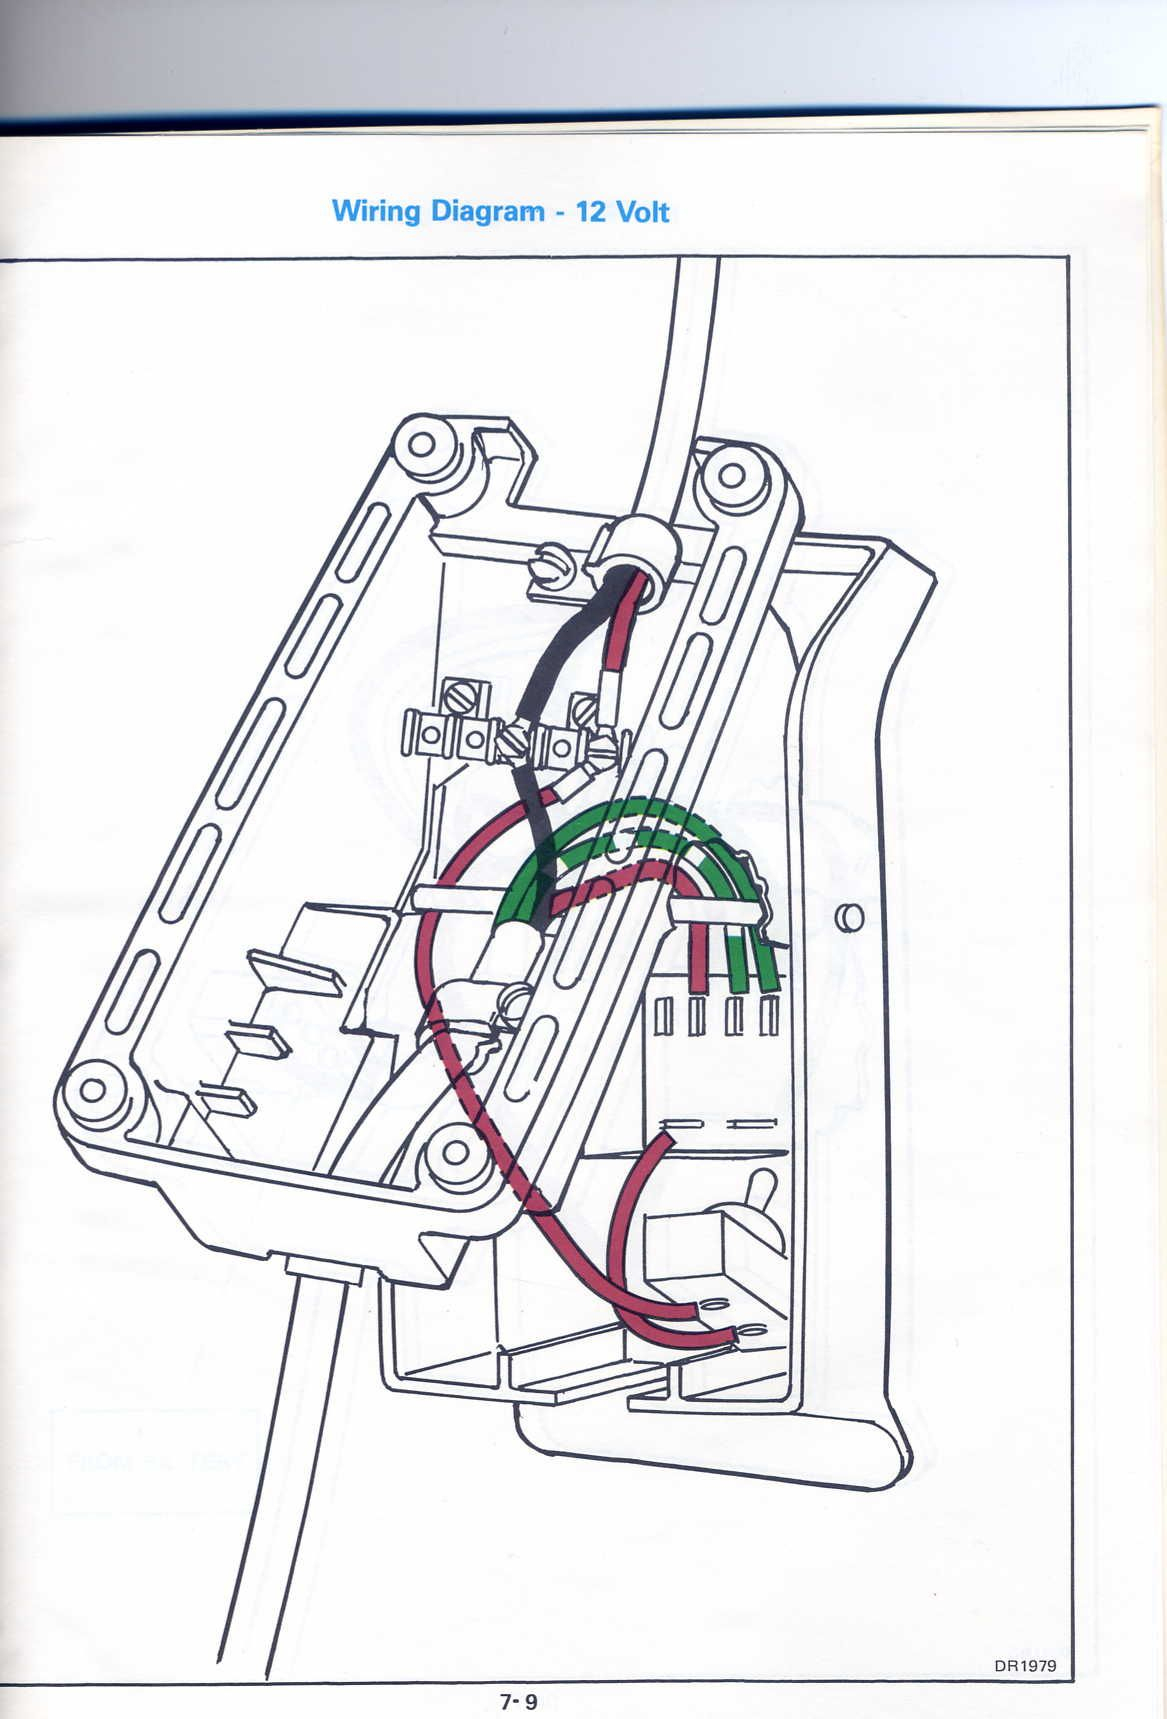 Motorguide Trolling Motor Wiring Diagram: Trying To Repair A Friends - Motorguide Trolling Motor Wiring Diagram